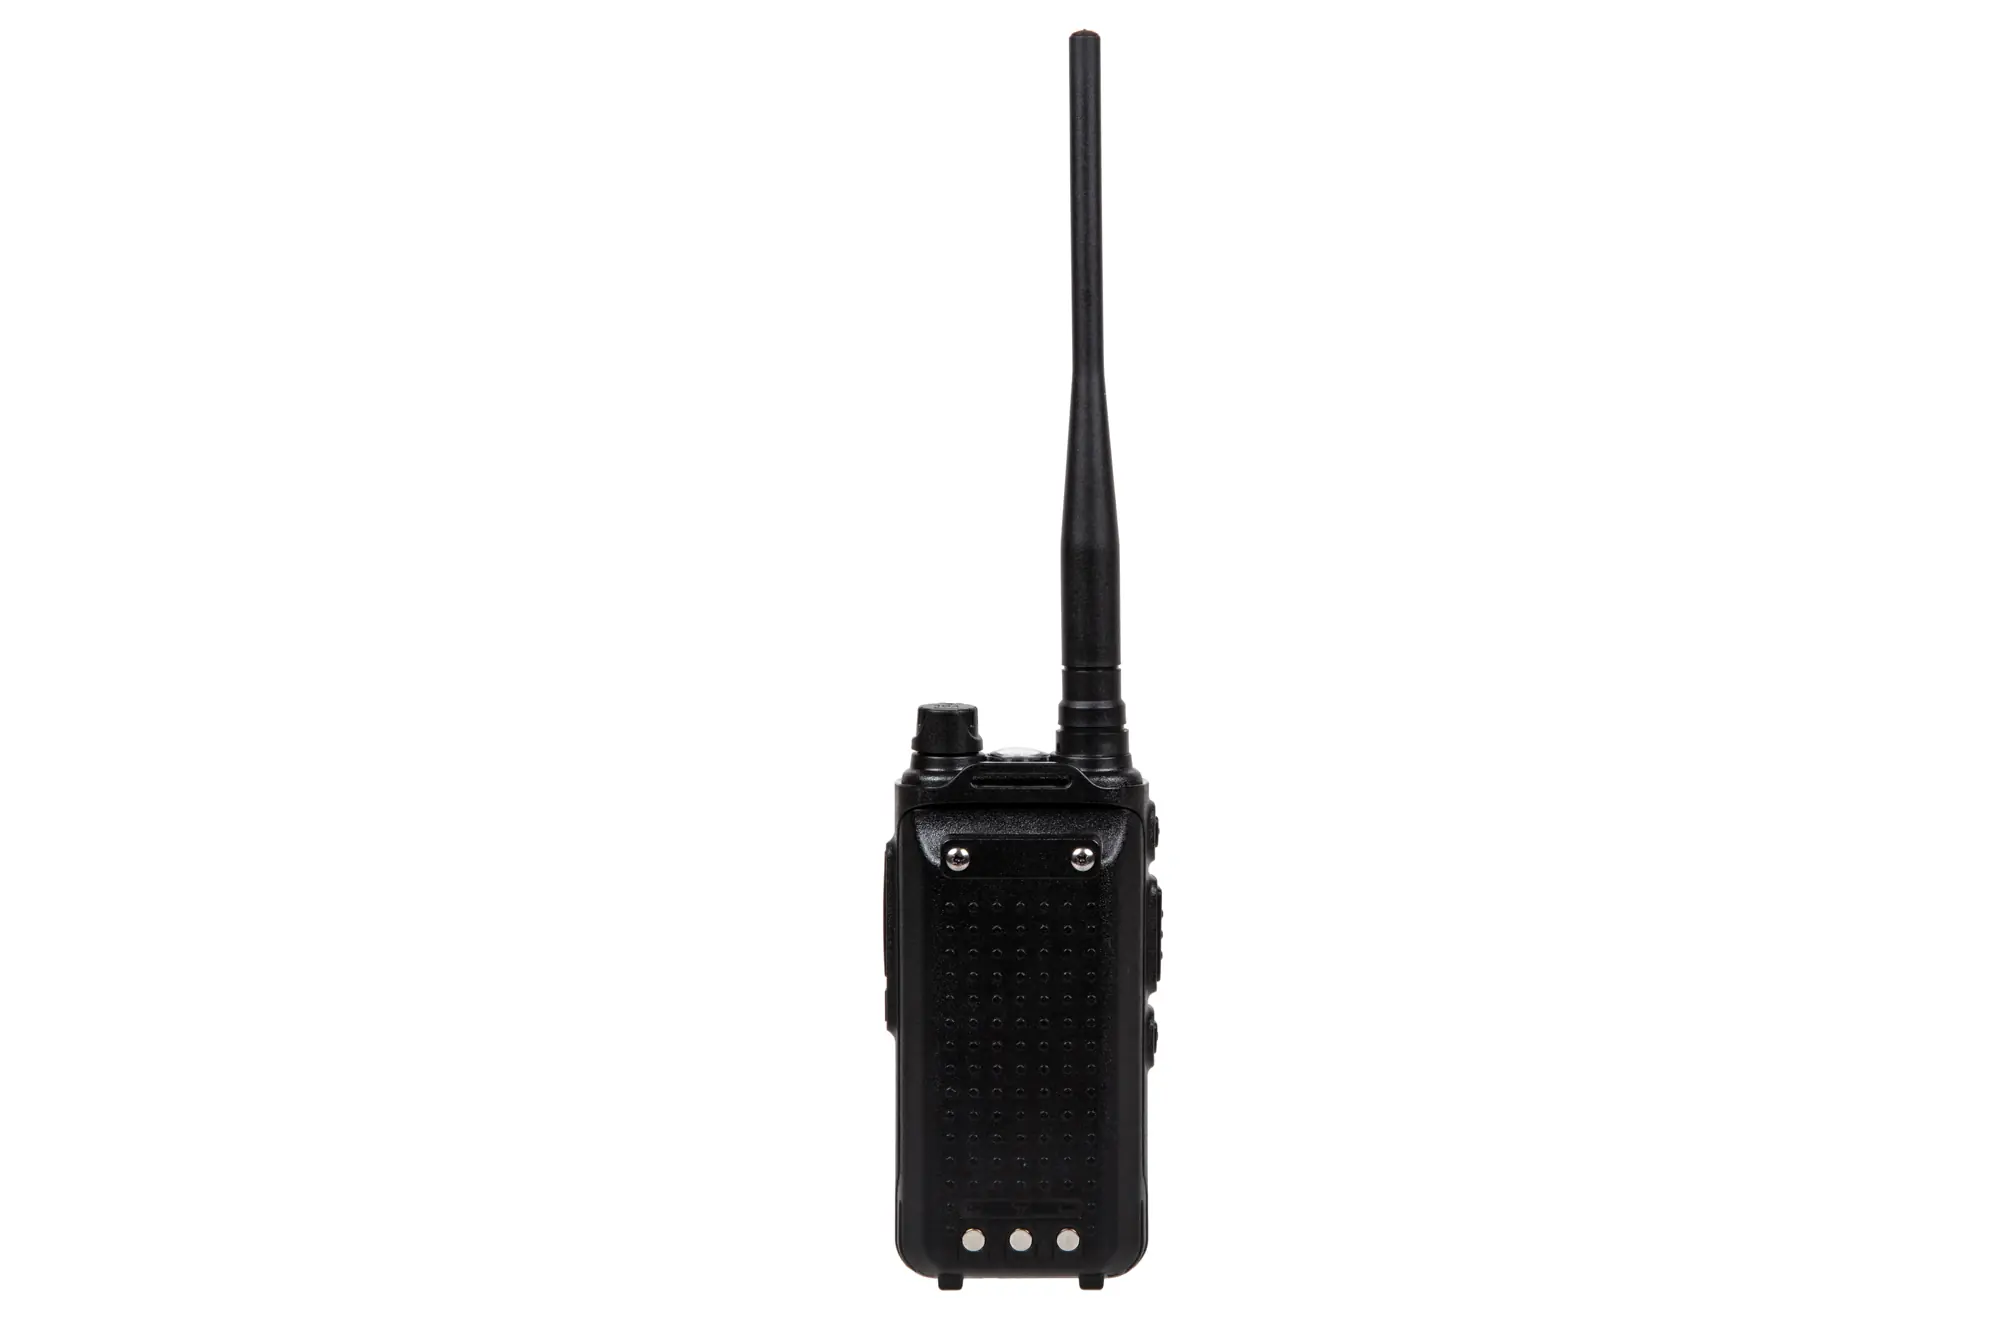 Specna Arms Radio Shortie 13 dual band (VHF/UHF)